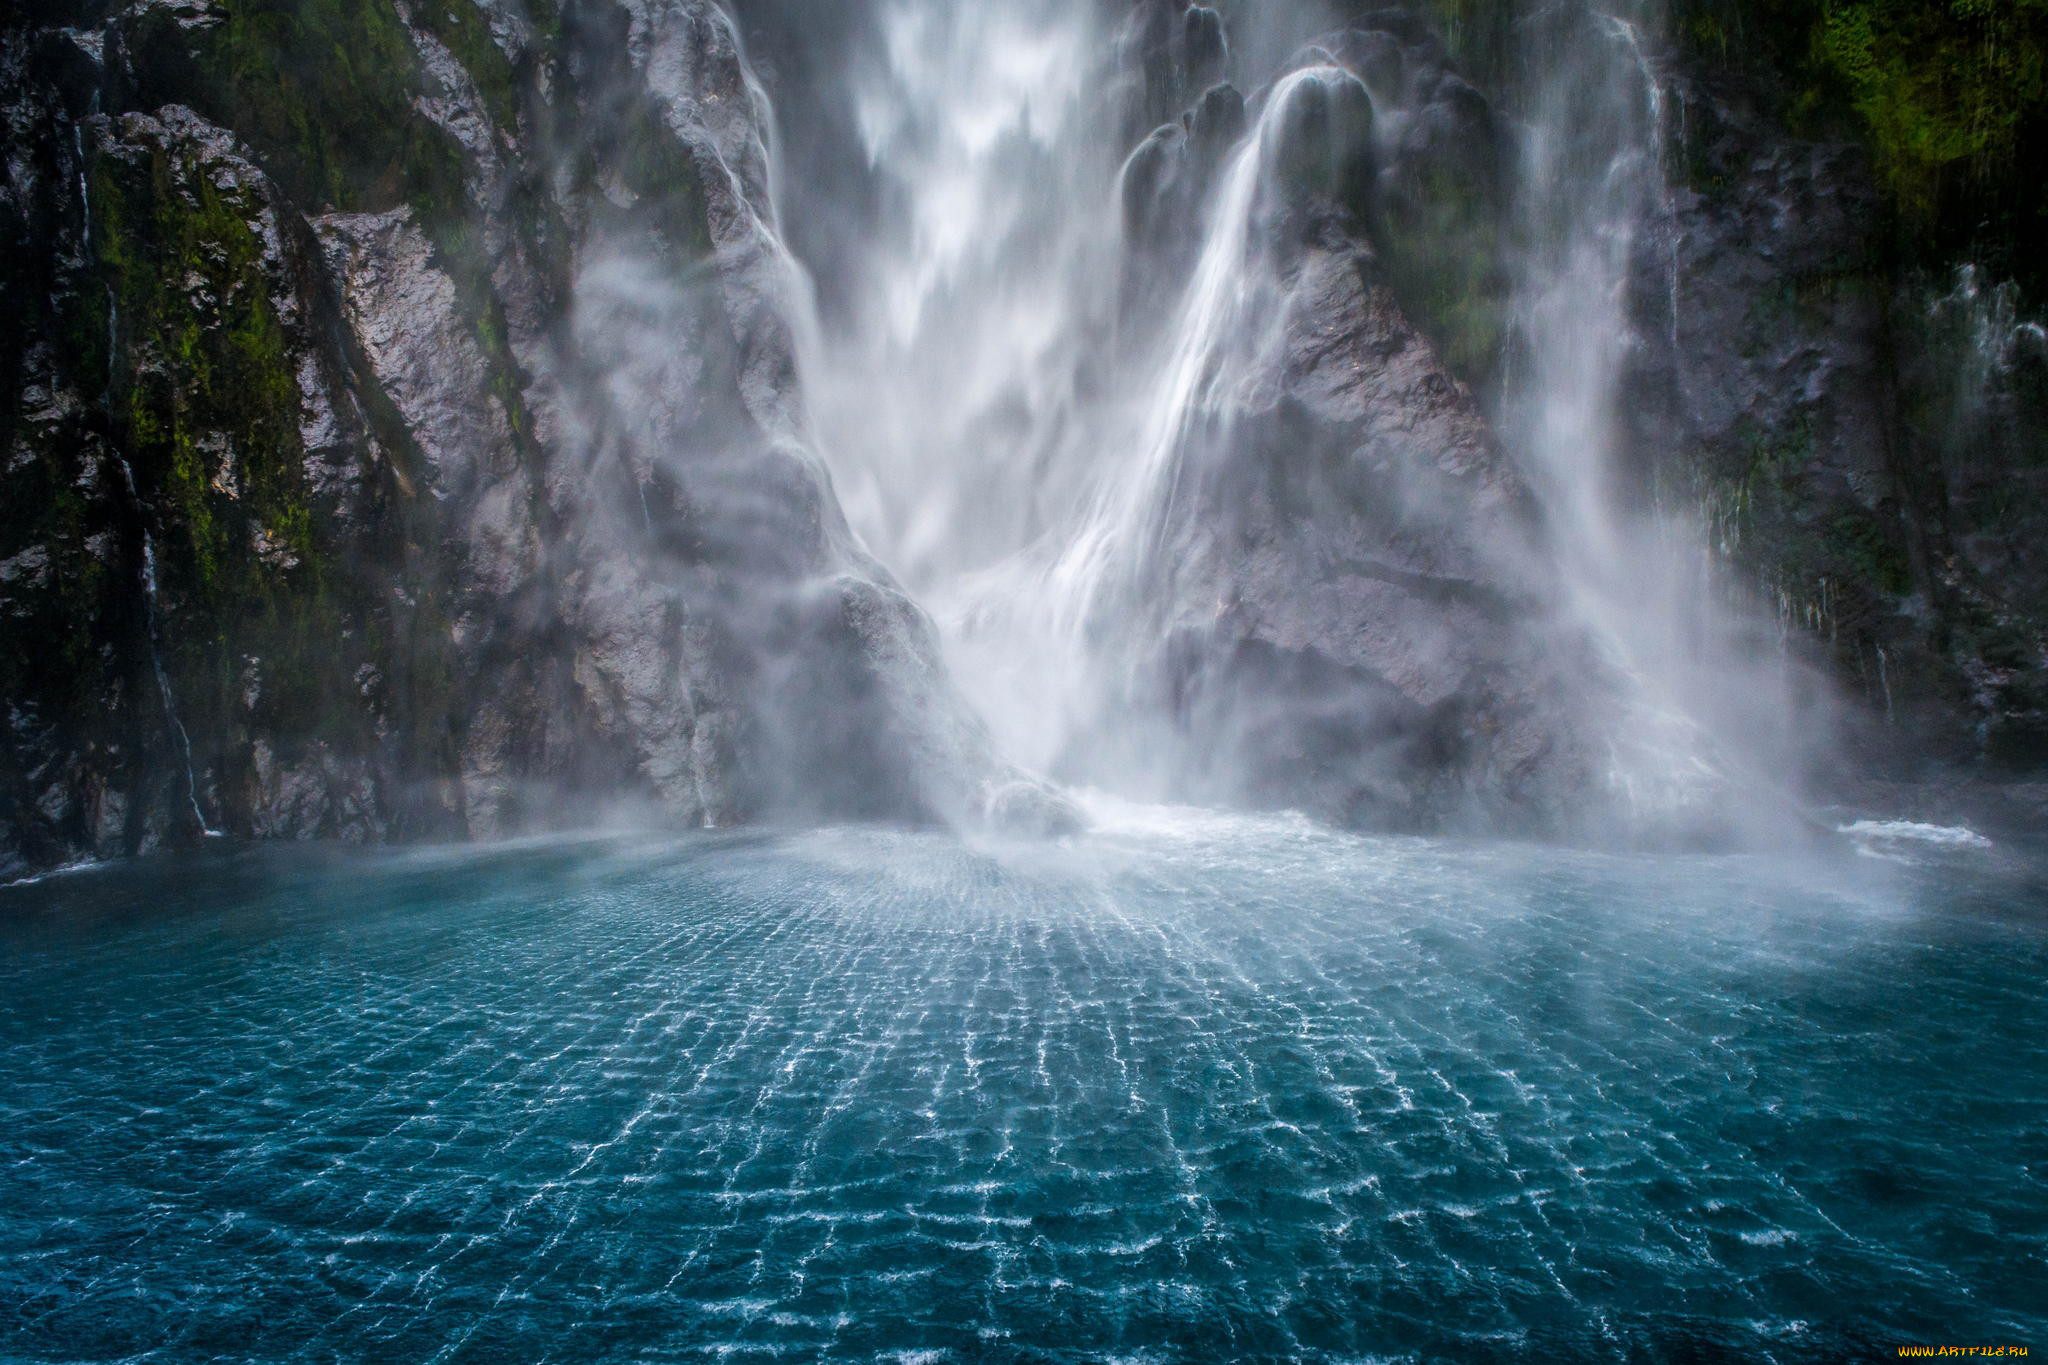 Картинки на заставку. Водопад « голубая Лагуна» ( г.холм). Милфорд саунд обратные водопады. Водопад Фэнго. Водопад Нгалиема.